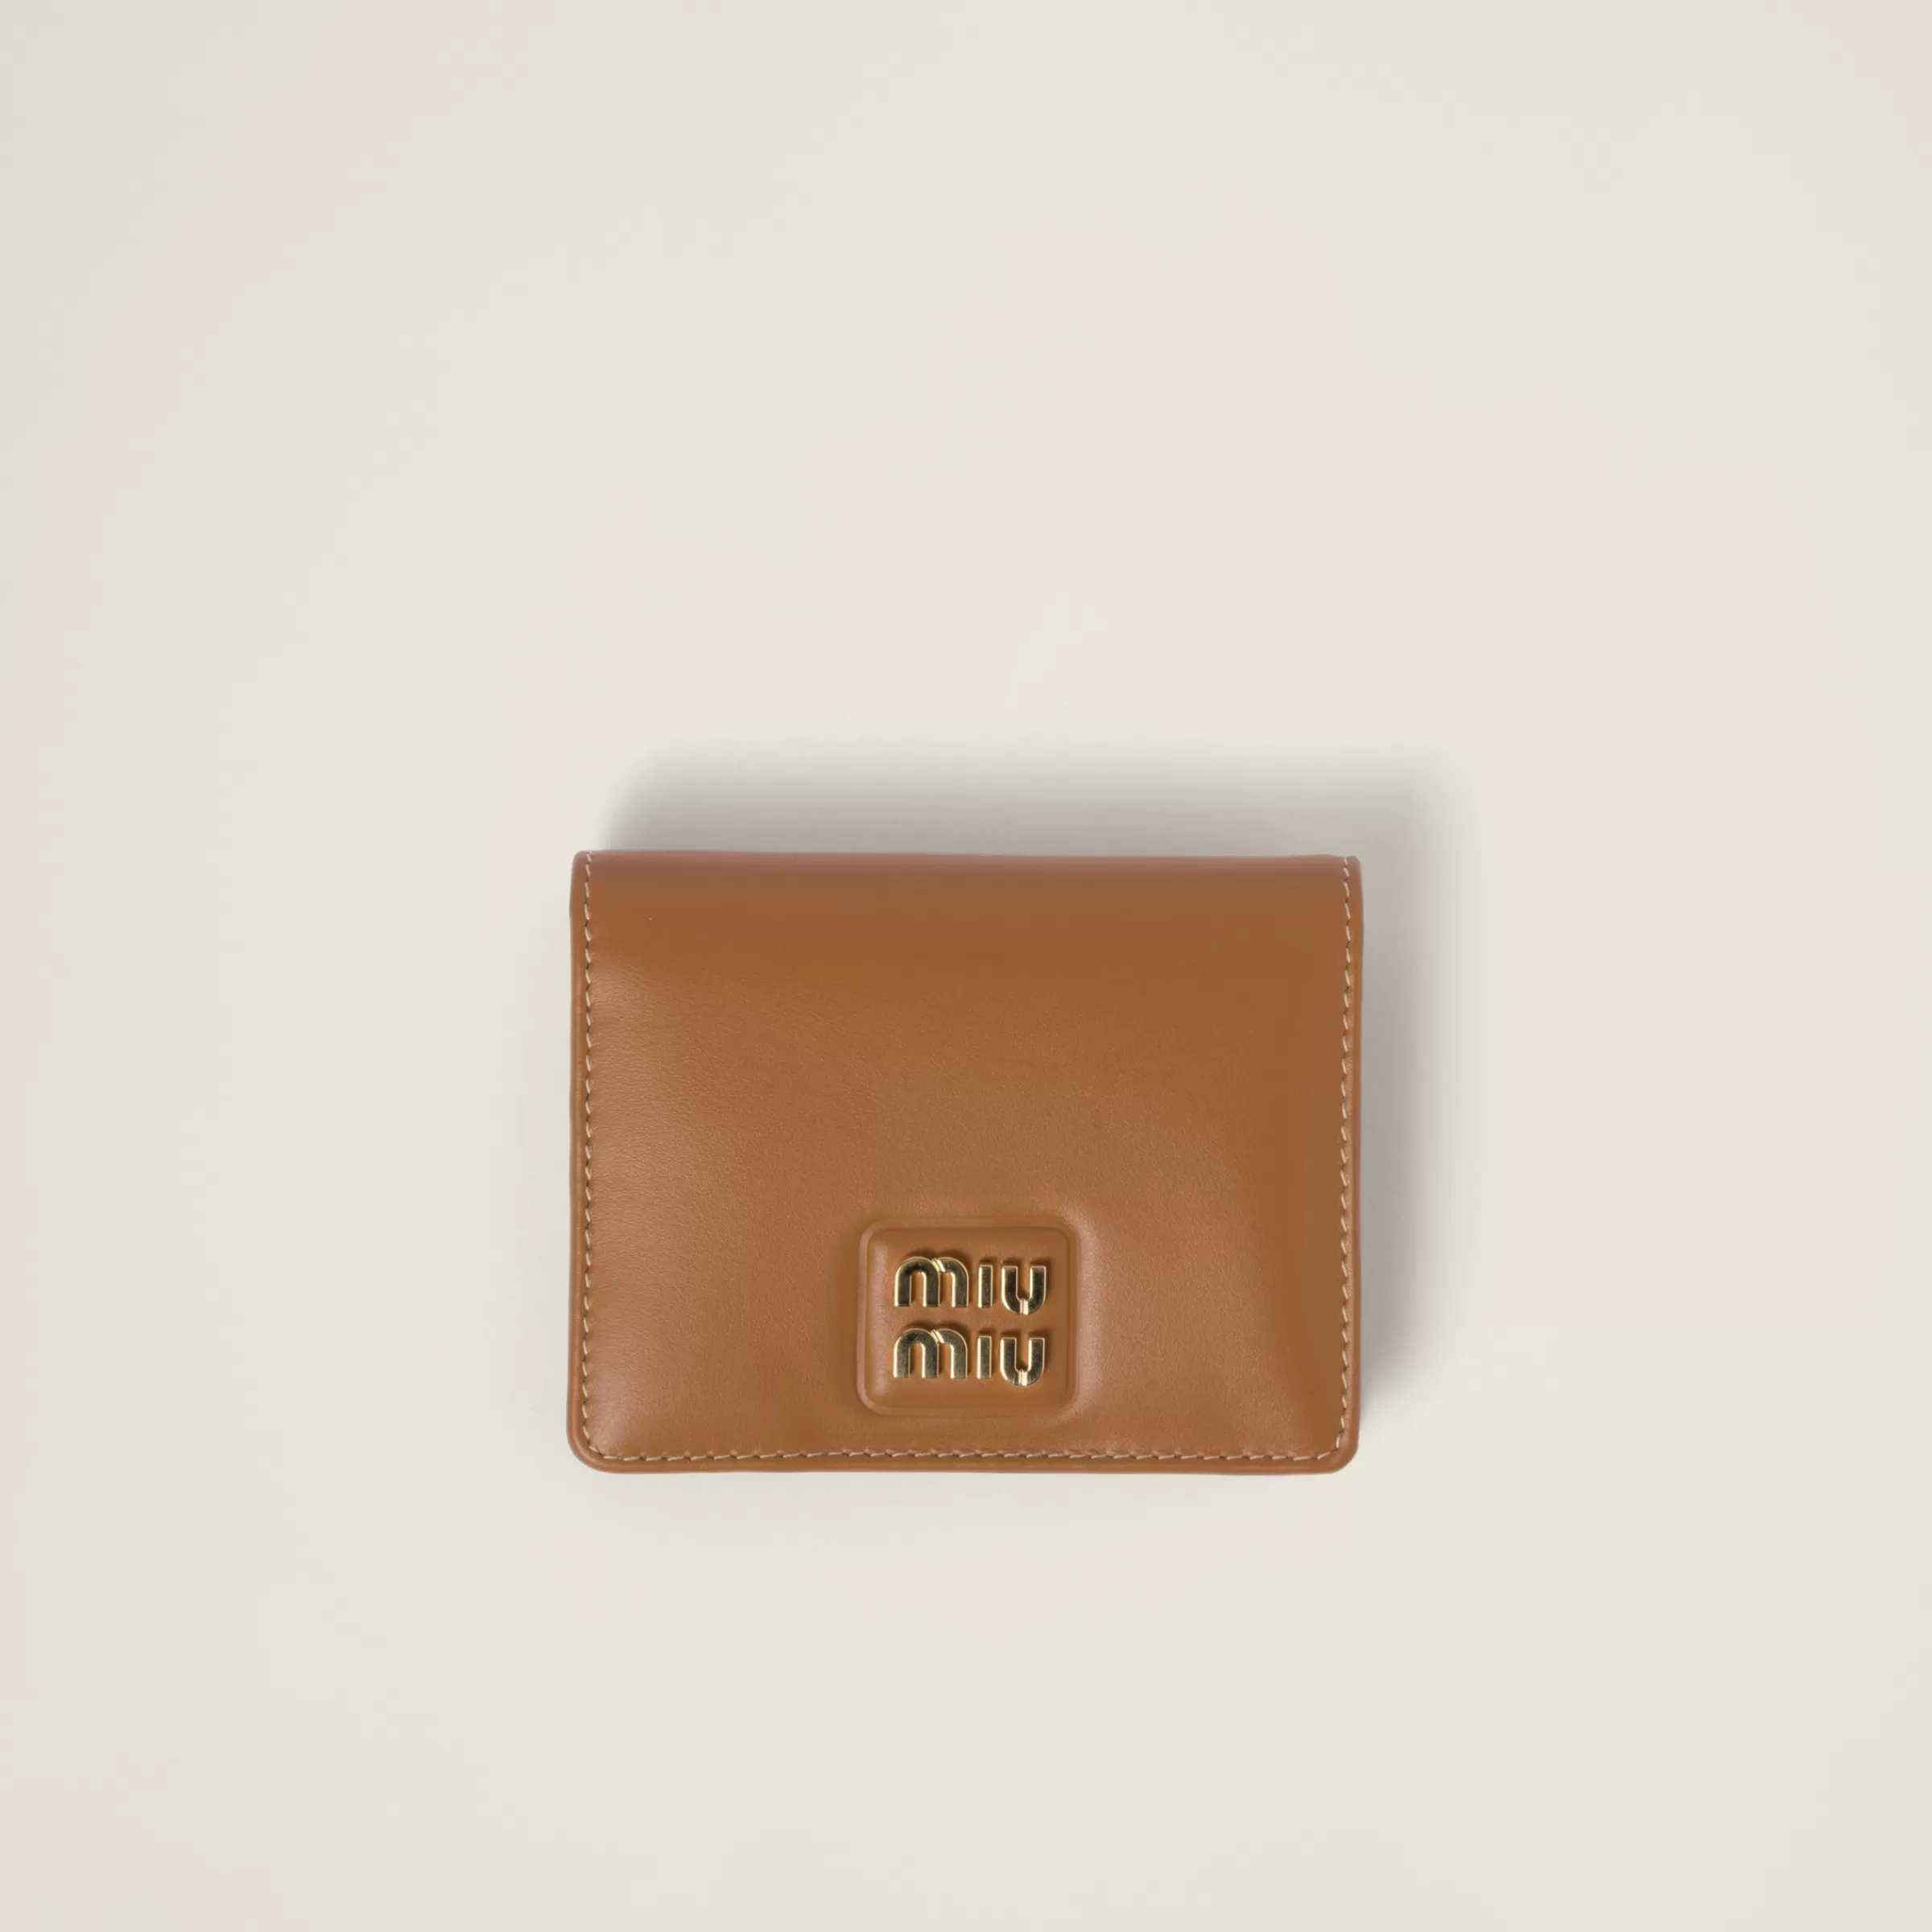 Miu Miu Small Leather Wallet |